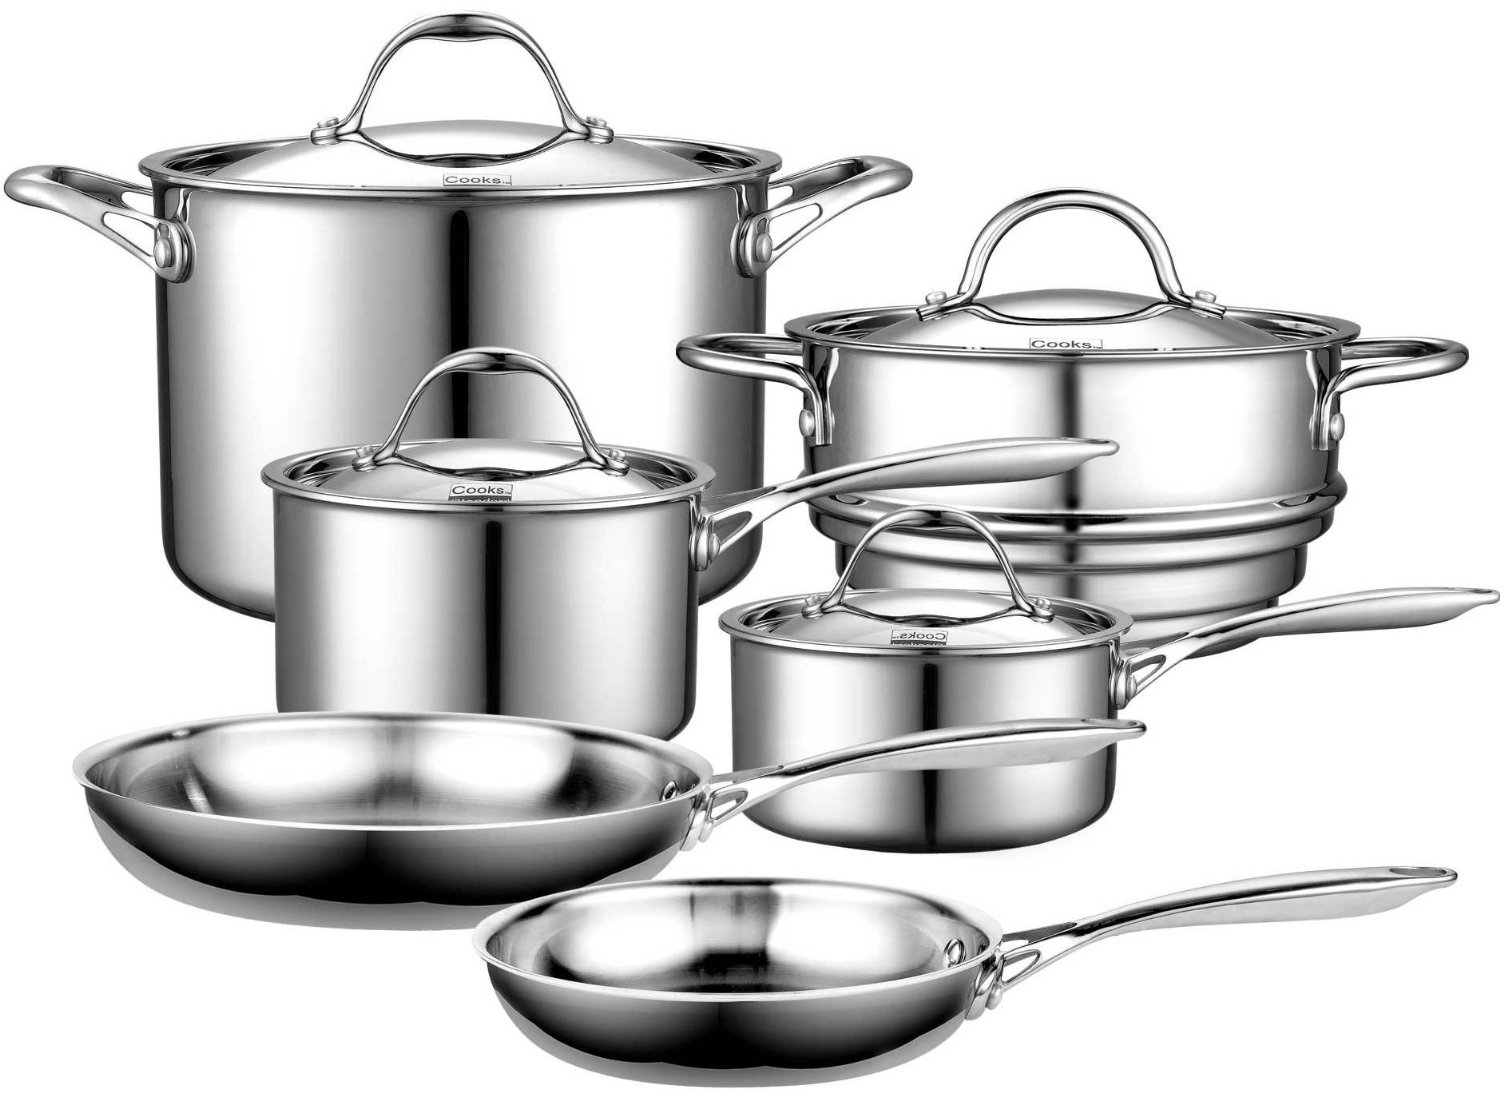 Stainless+steel+cooking+utensils+images+(42).jpg